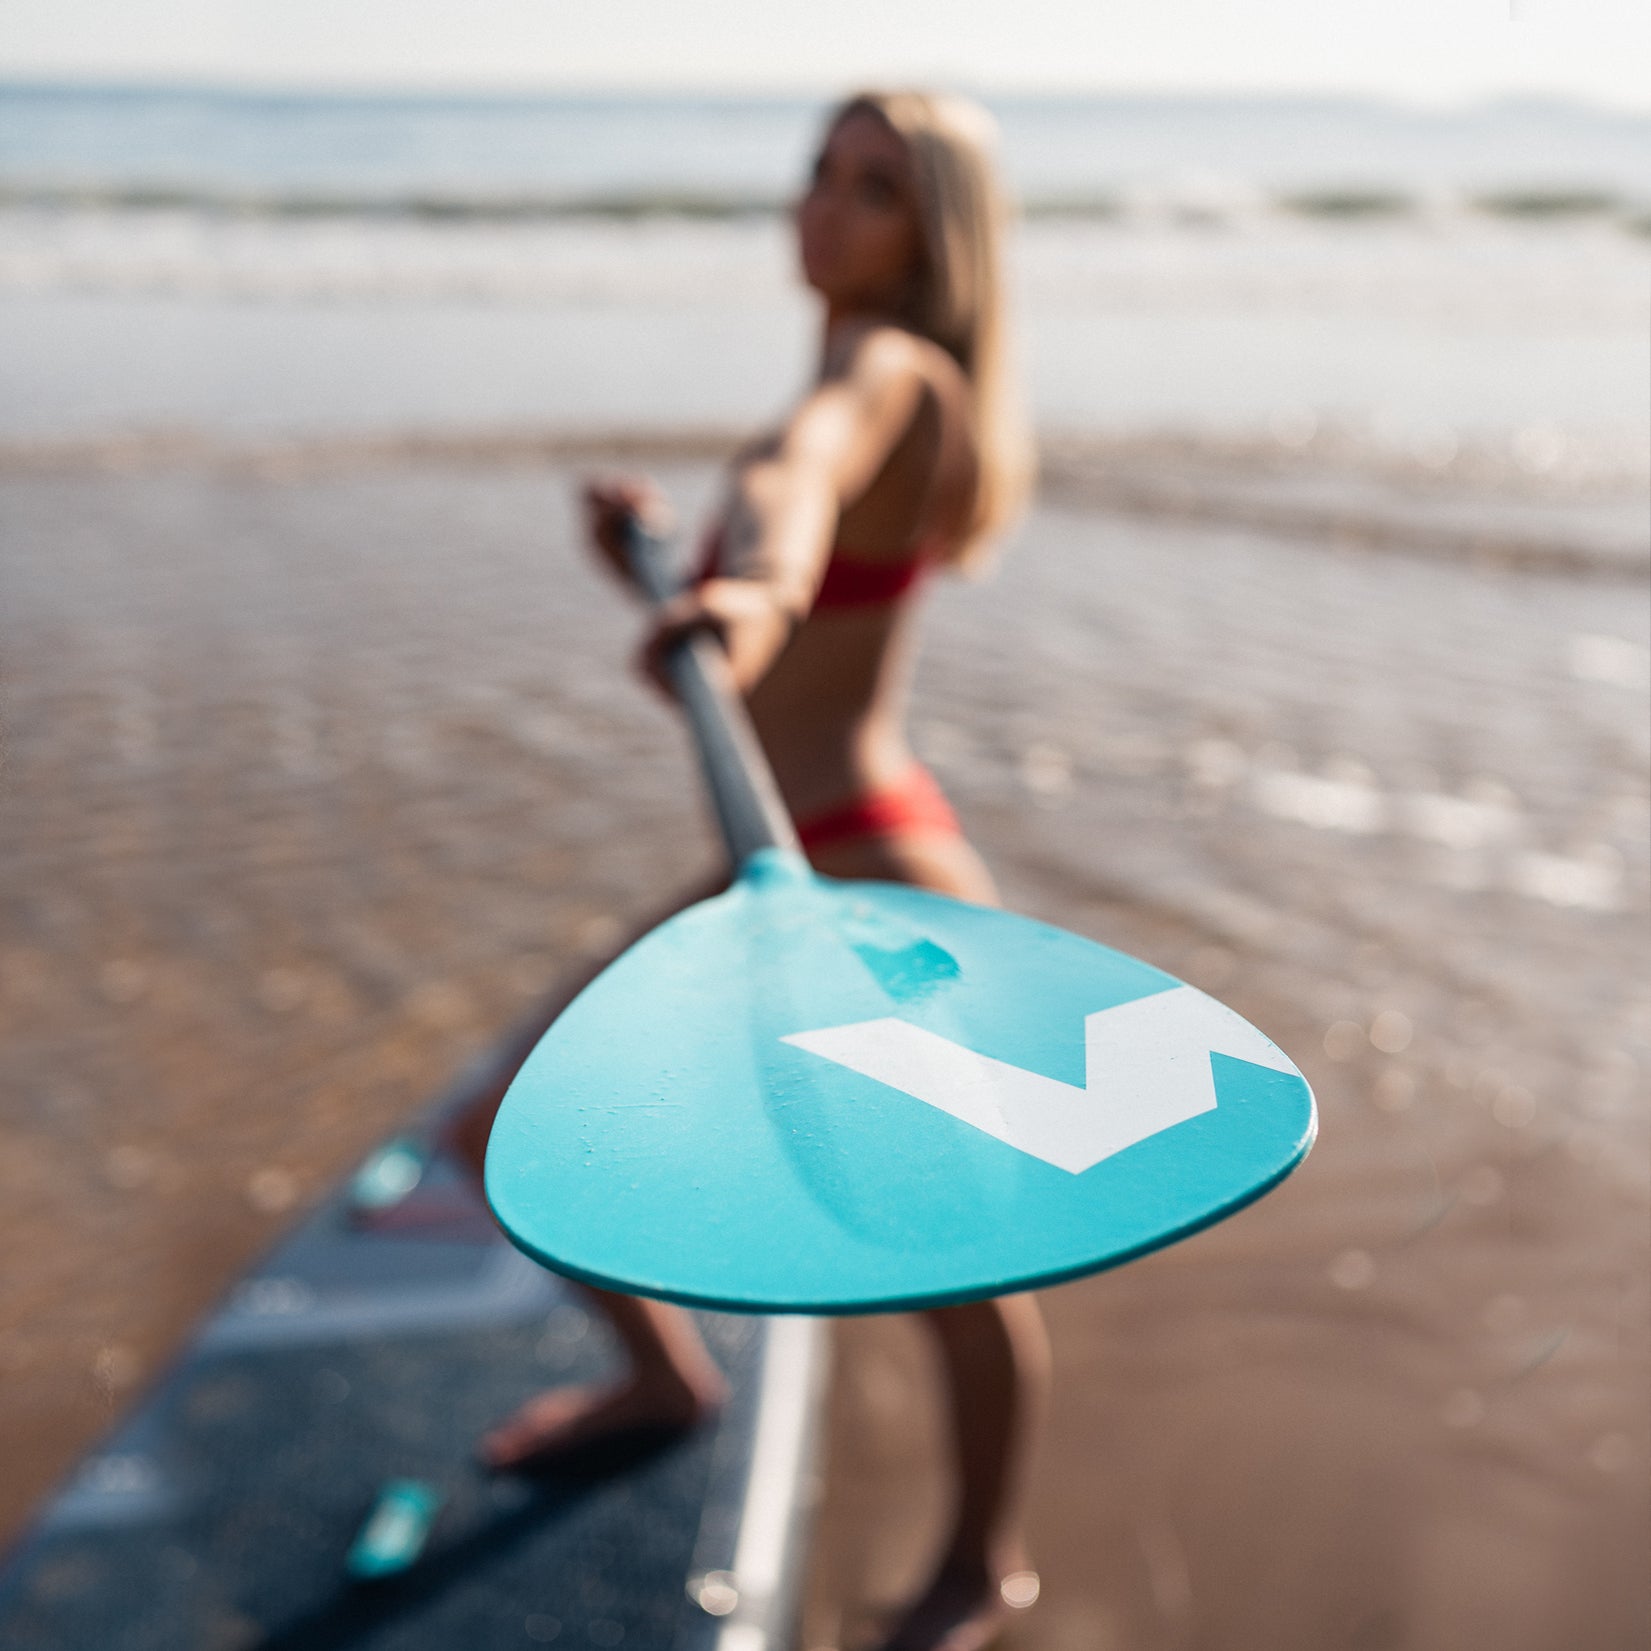 Wave SUP Aluminium Paddle | Orange Paddle for Tourer, Cruiser, Woody Paddle Boards - Wave Spas Inflatable, foam Hot Tubs